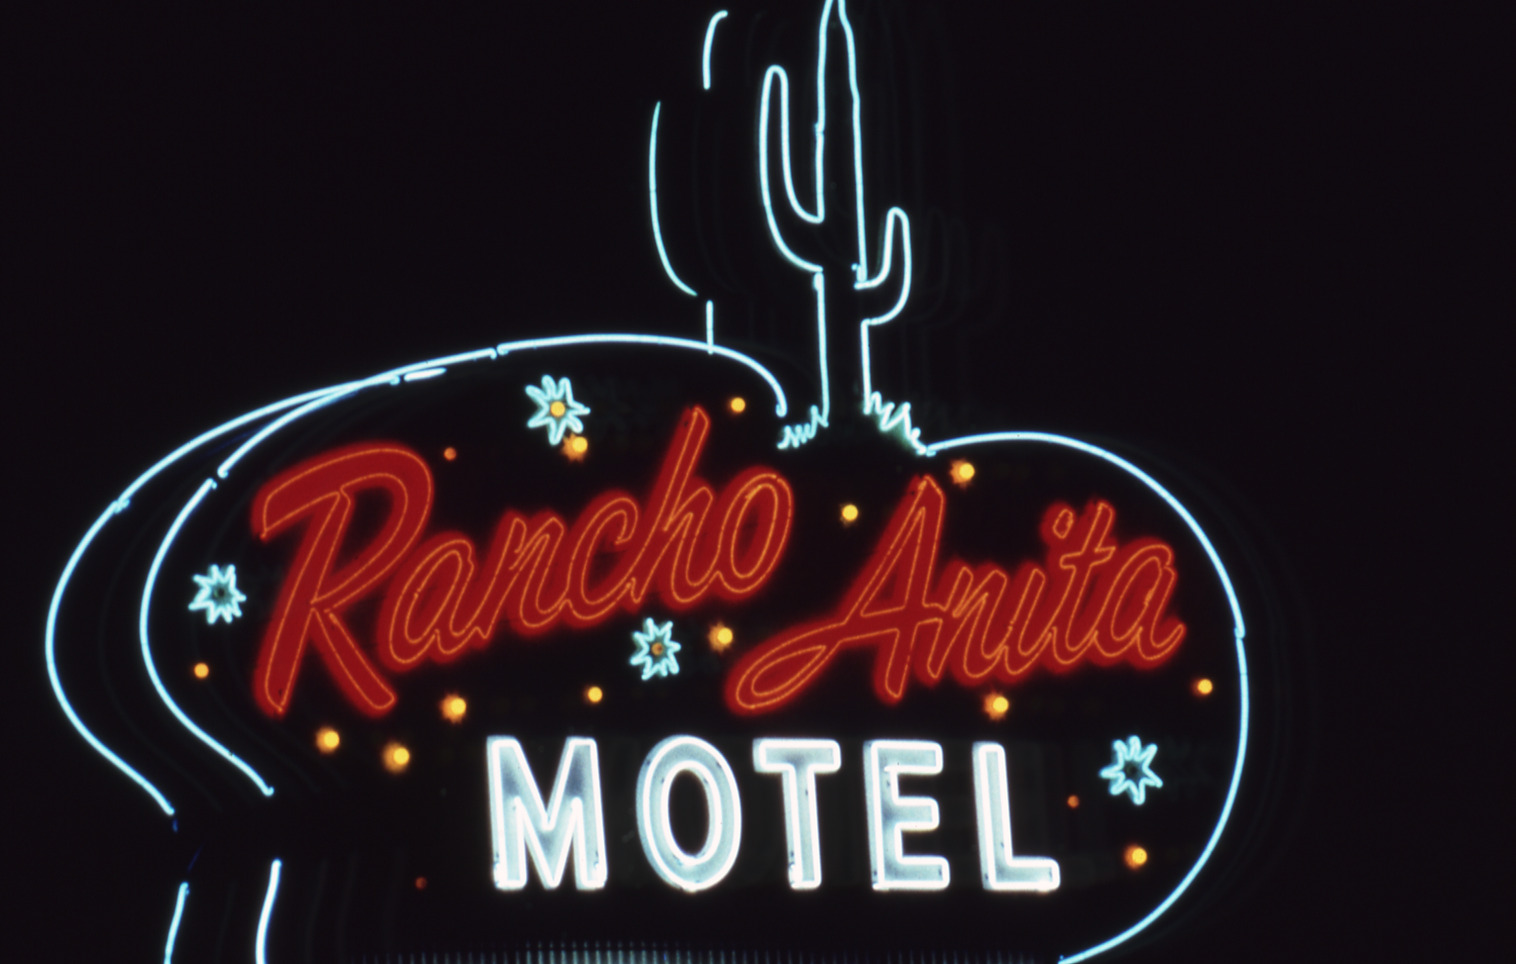 Rancho Anita Motel sign, Las Vegas, Nevada: photographic print